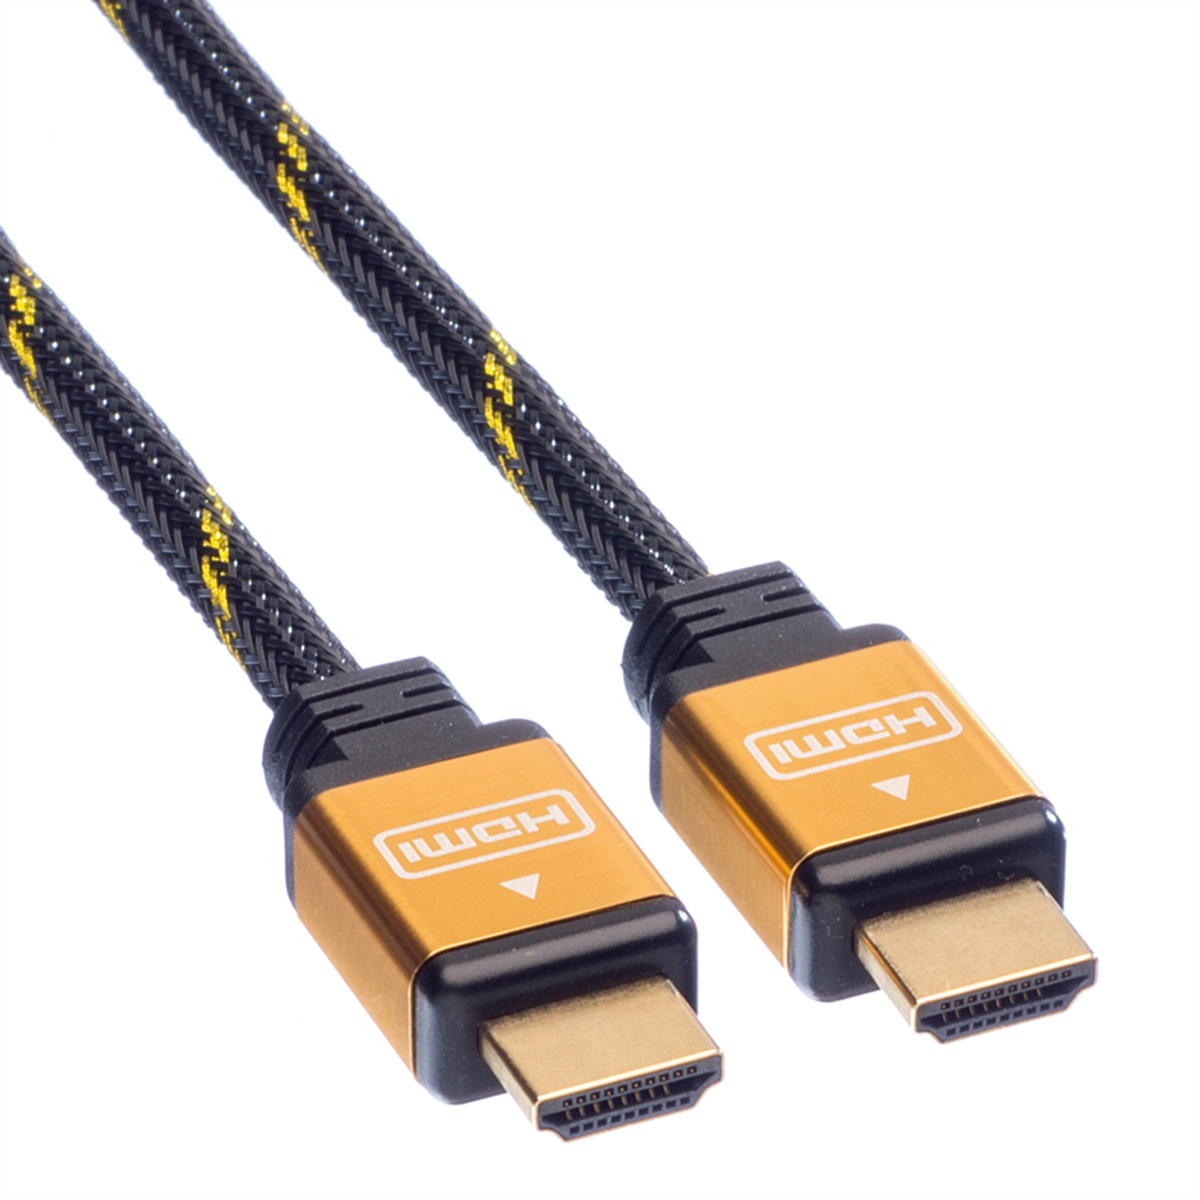 ROLINE GOLD HDMI Kabel, ST/ST, 1m Retail im Blister